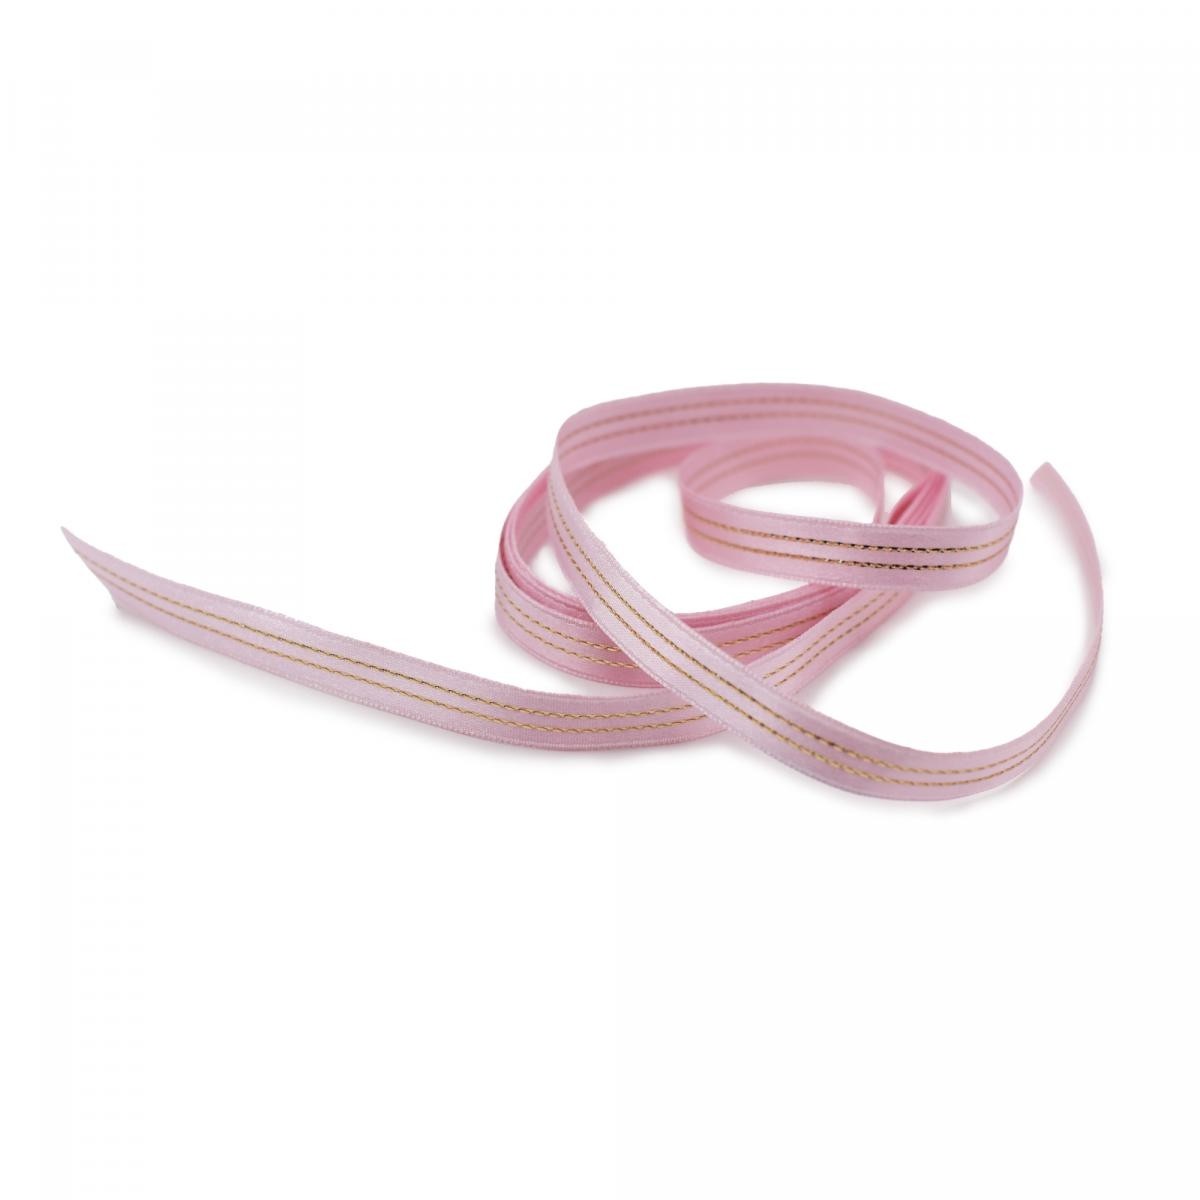 Oops - 手作/禮物包裝絲帶 | 粉紅色金線 | 200cm | Wrapping Handmade Craft Ribbon | Pink with Golden Line | 200cm